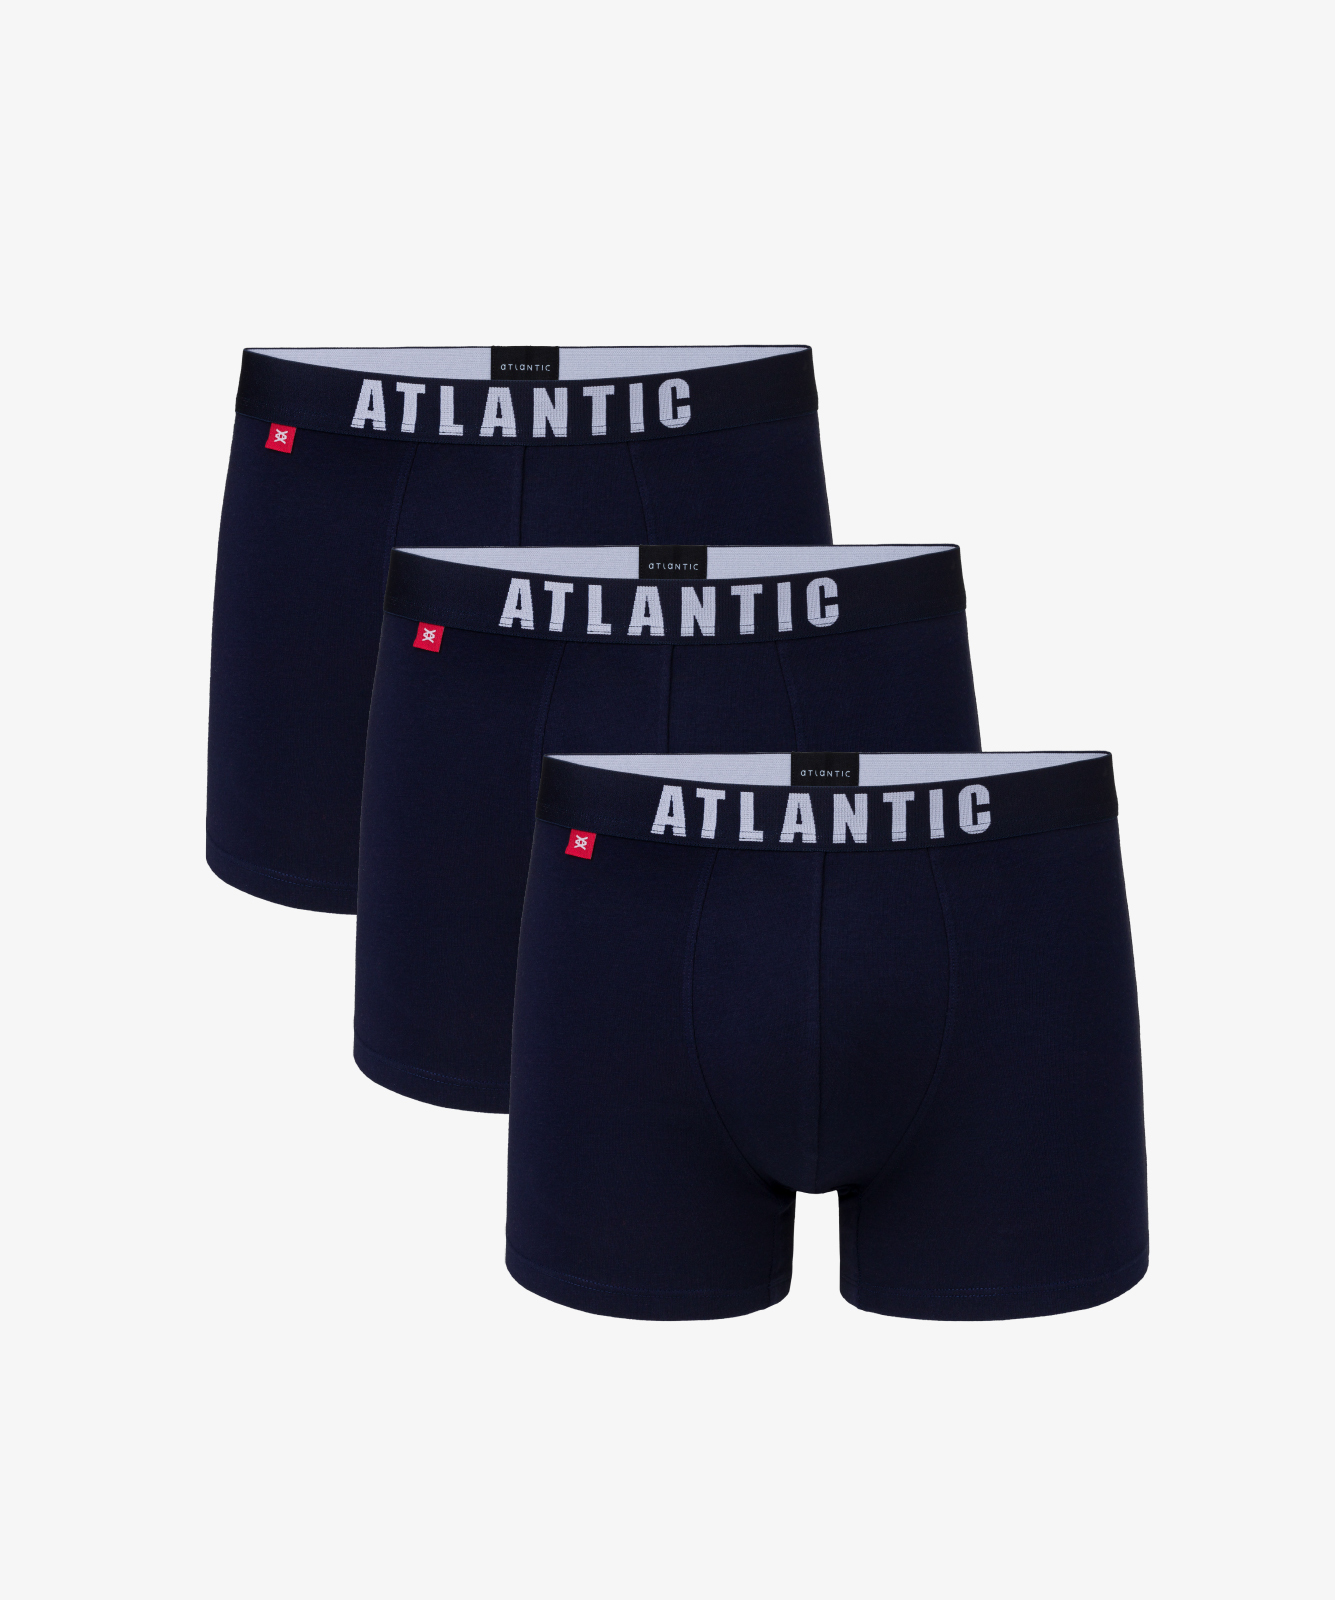 3-PACK Men's boxers ATLANTIC navy